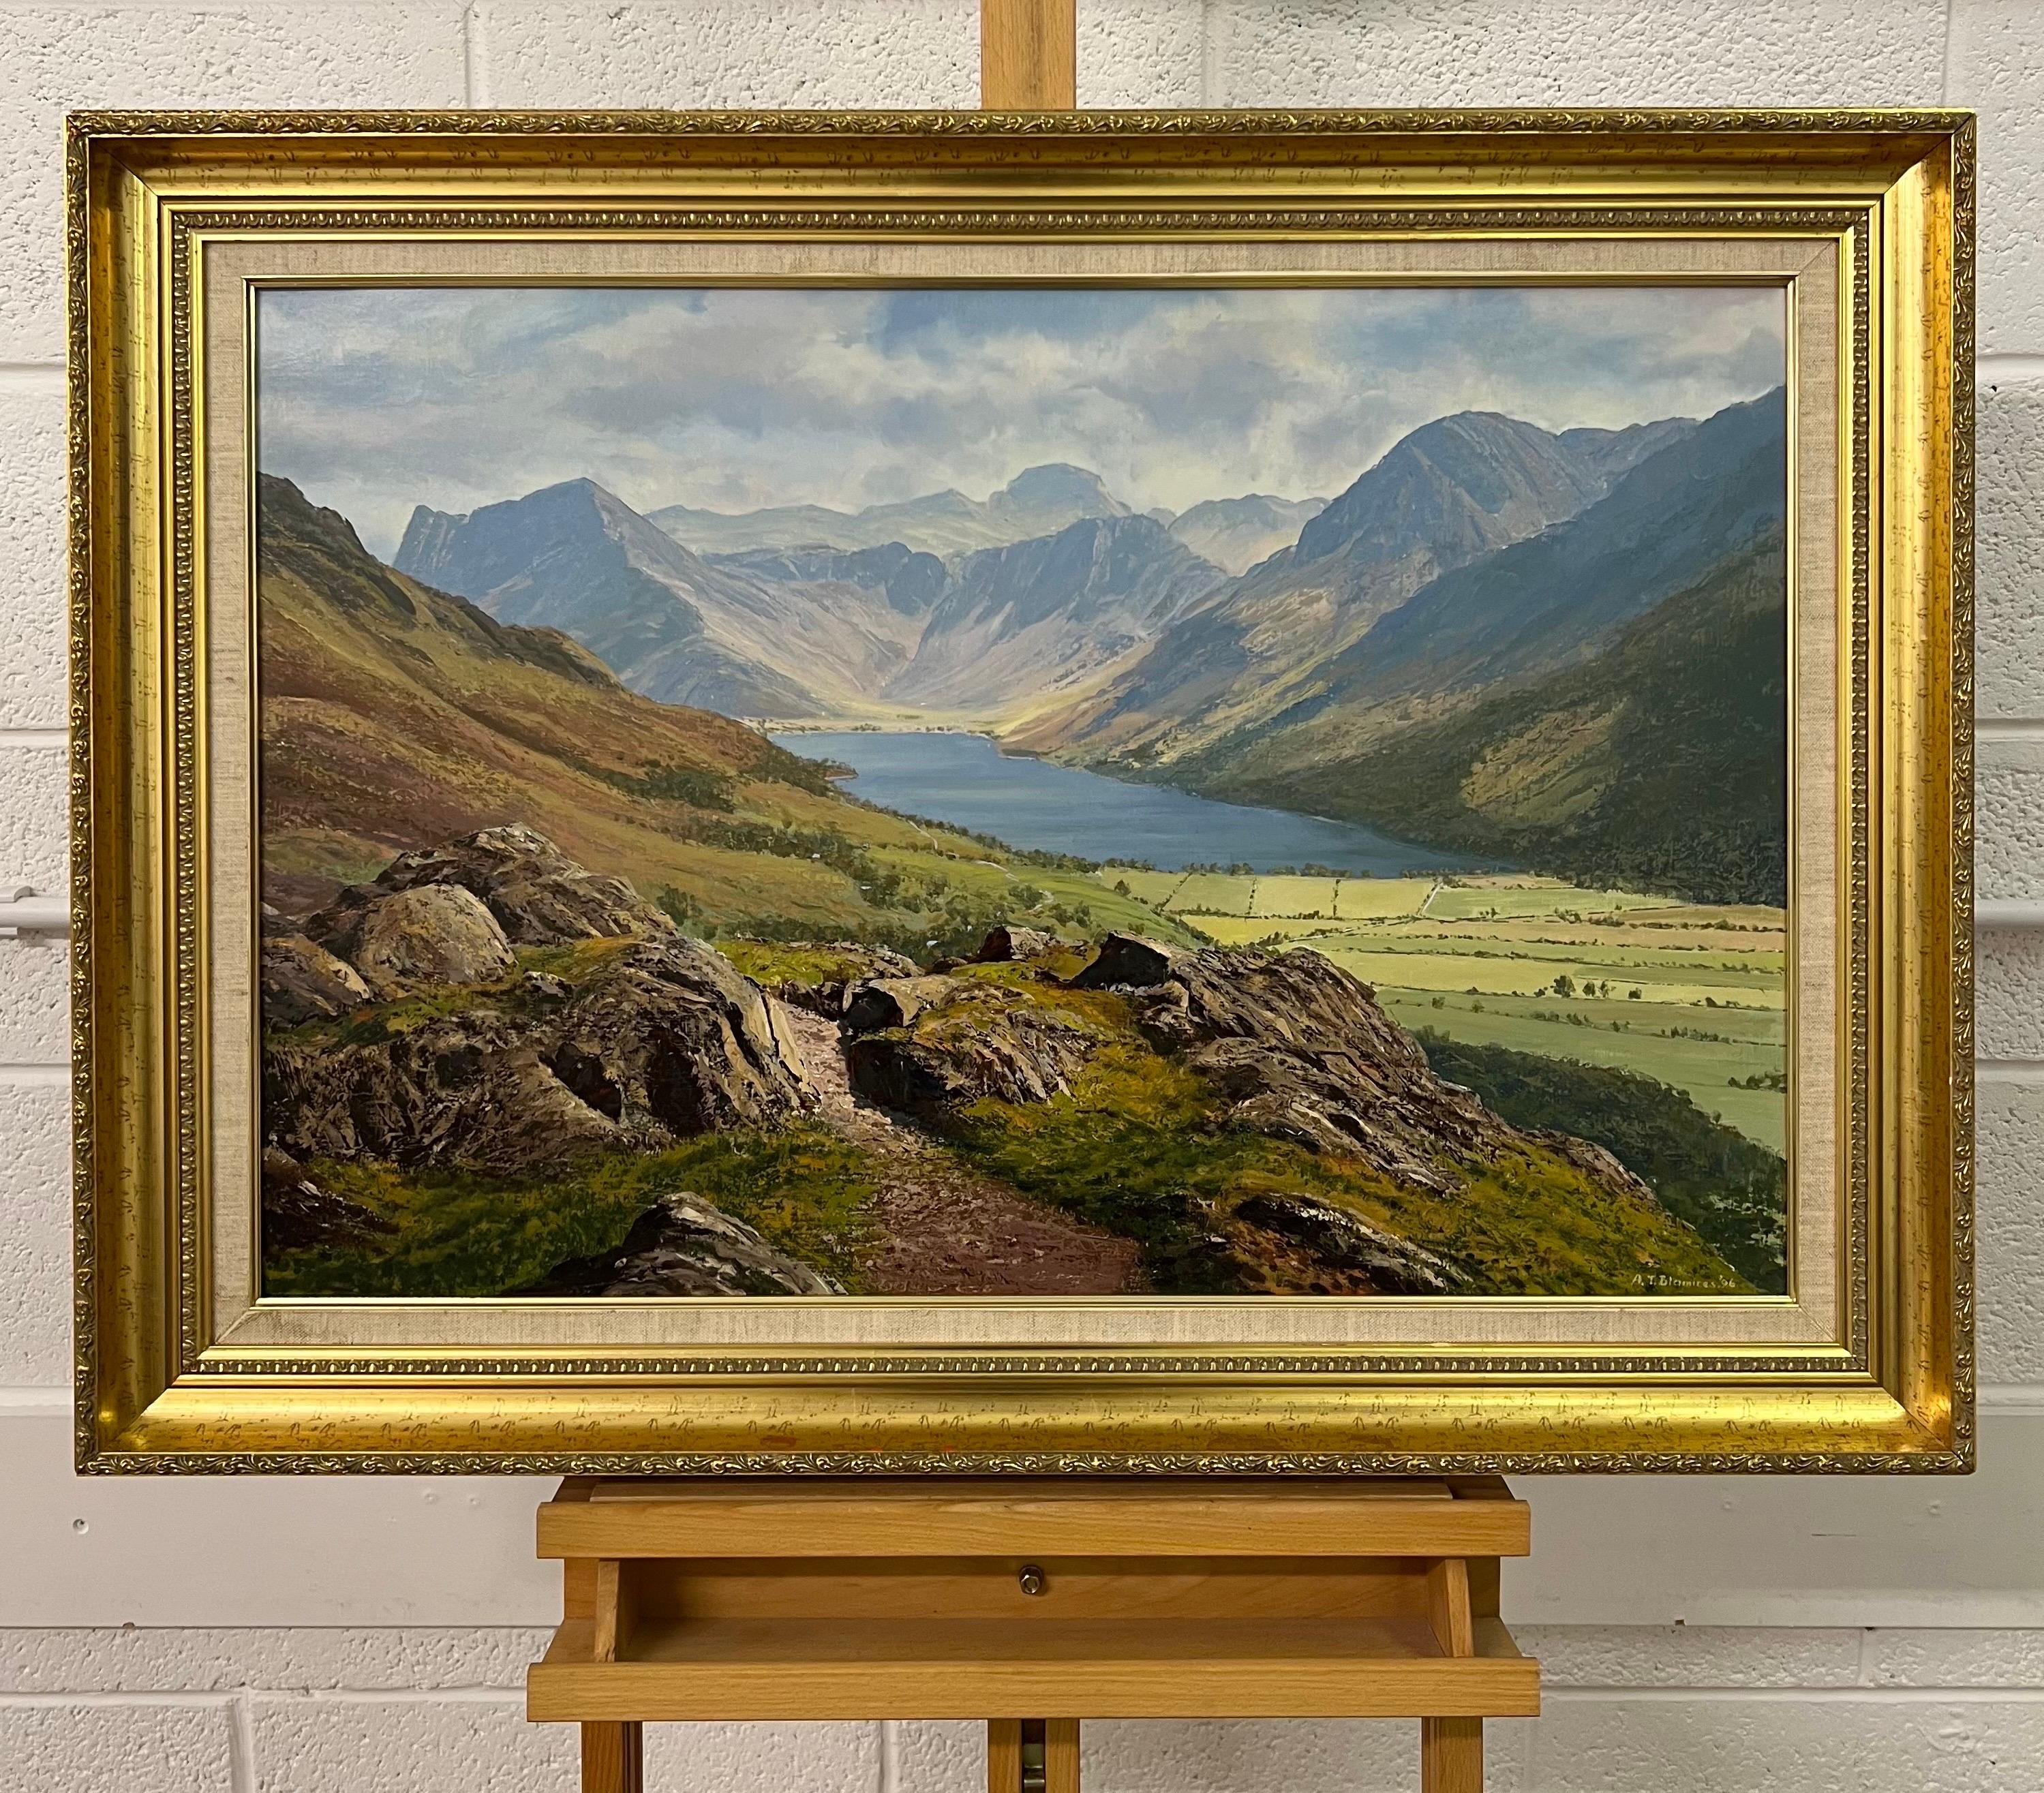 20th century british landscape painters